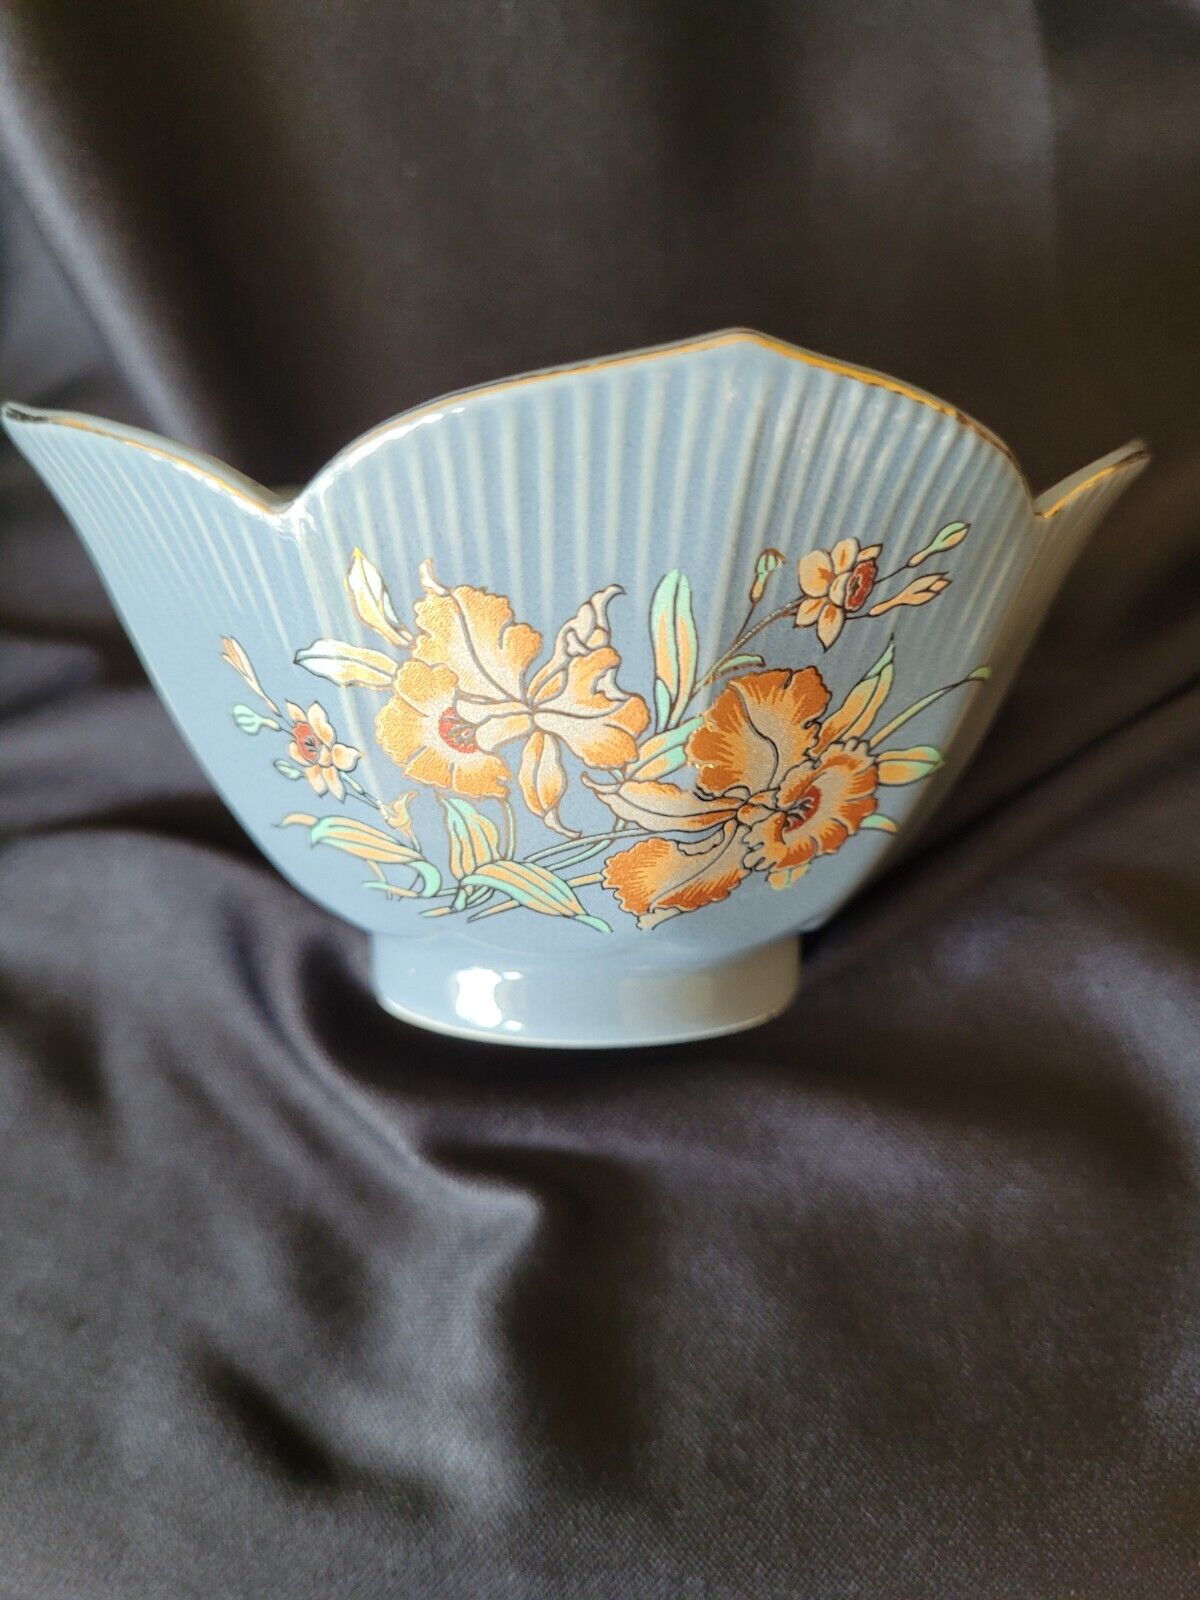 Vintage Japanese tulip bowl, blue with peach floral design